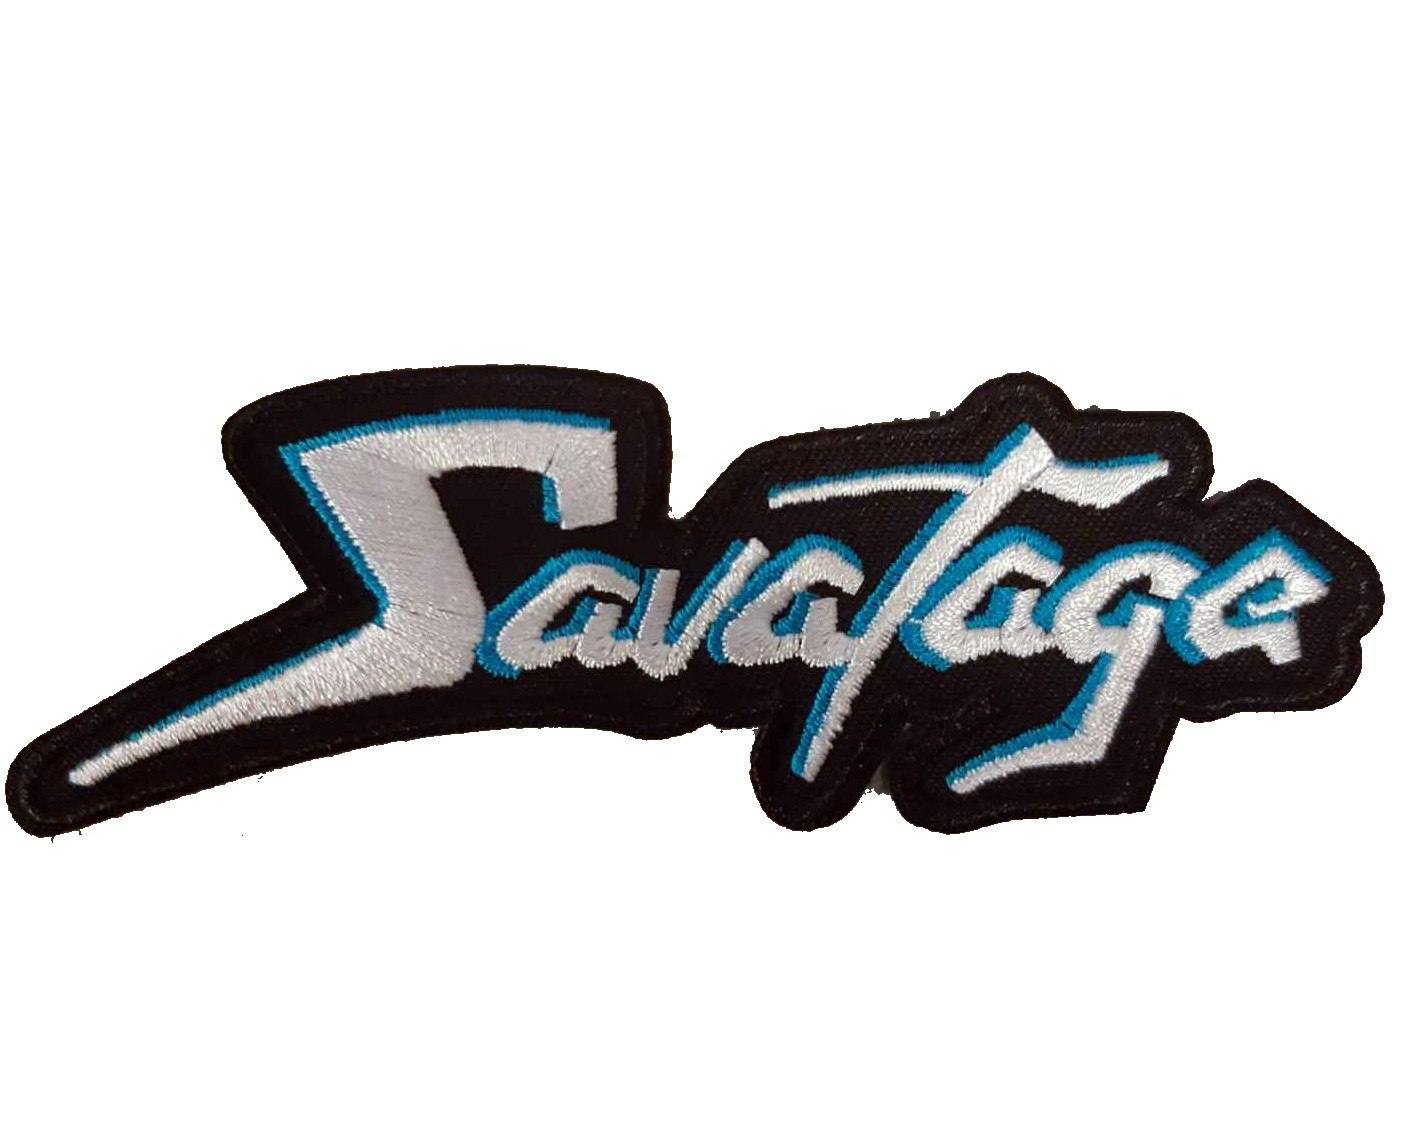 Savatage logo patch